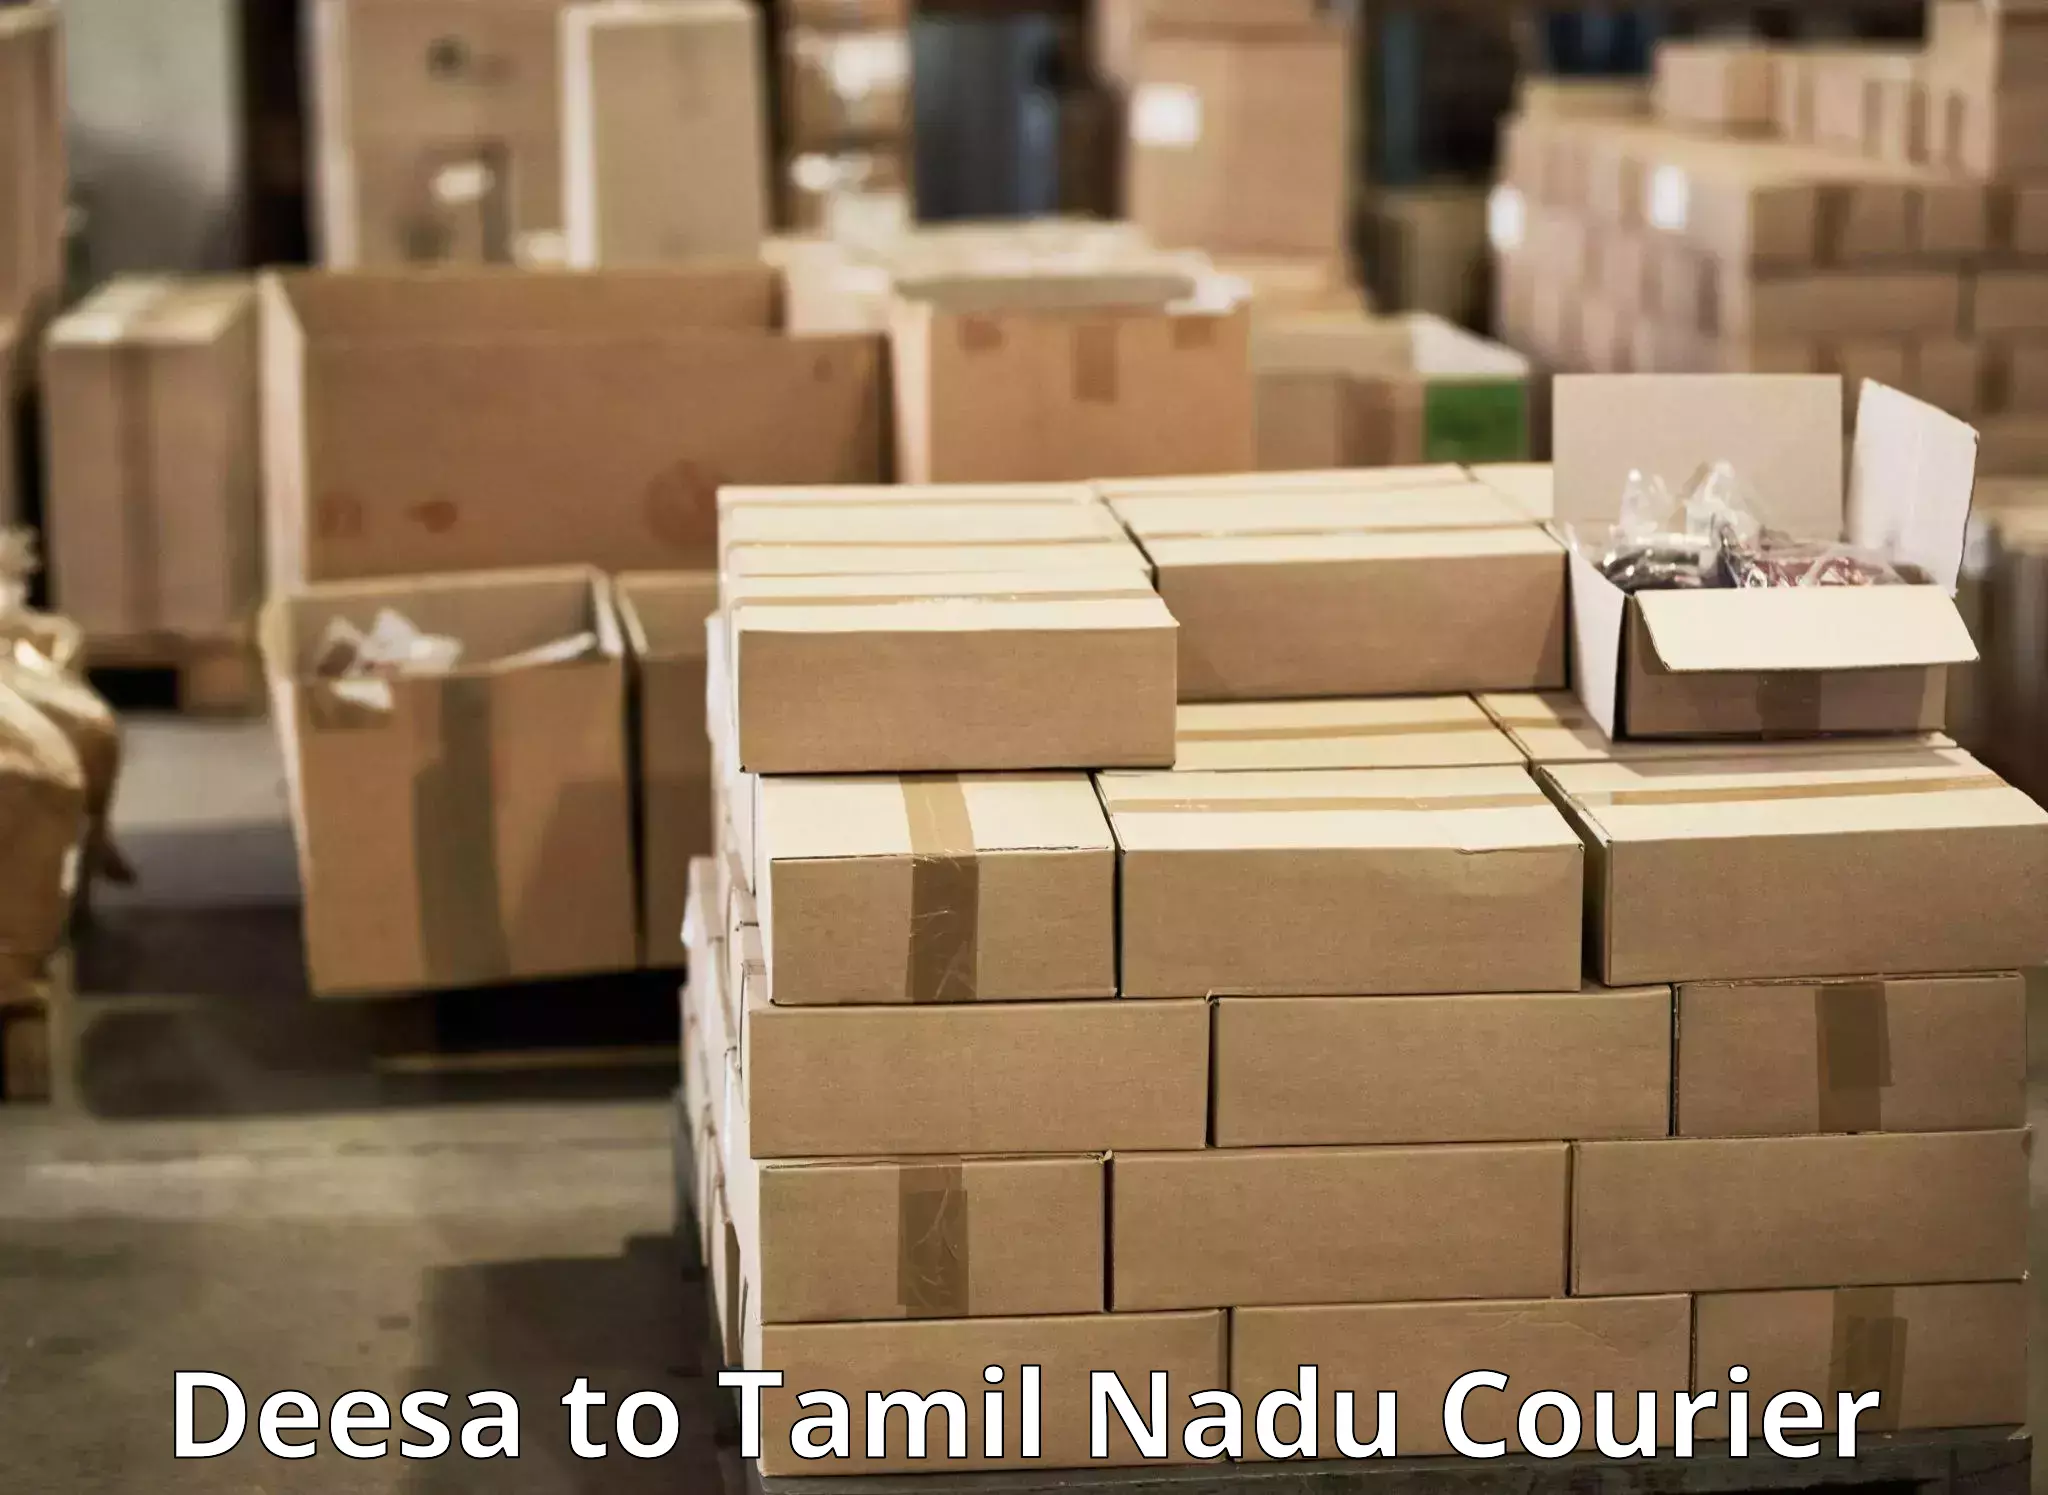 Nationwide parcel services Deesa to Memalur